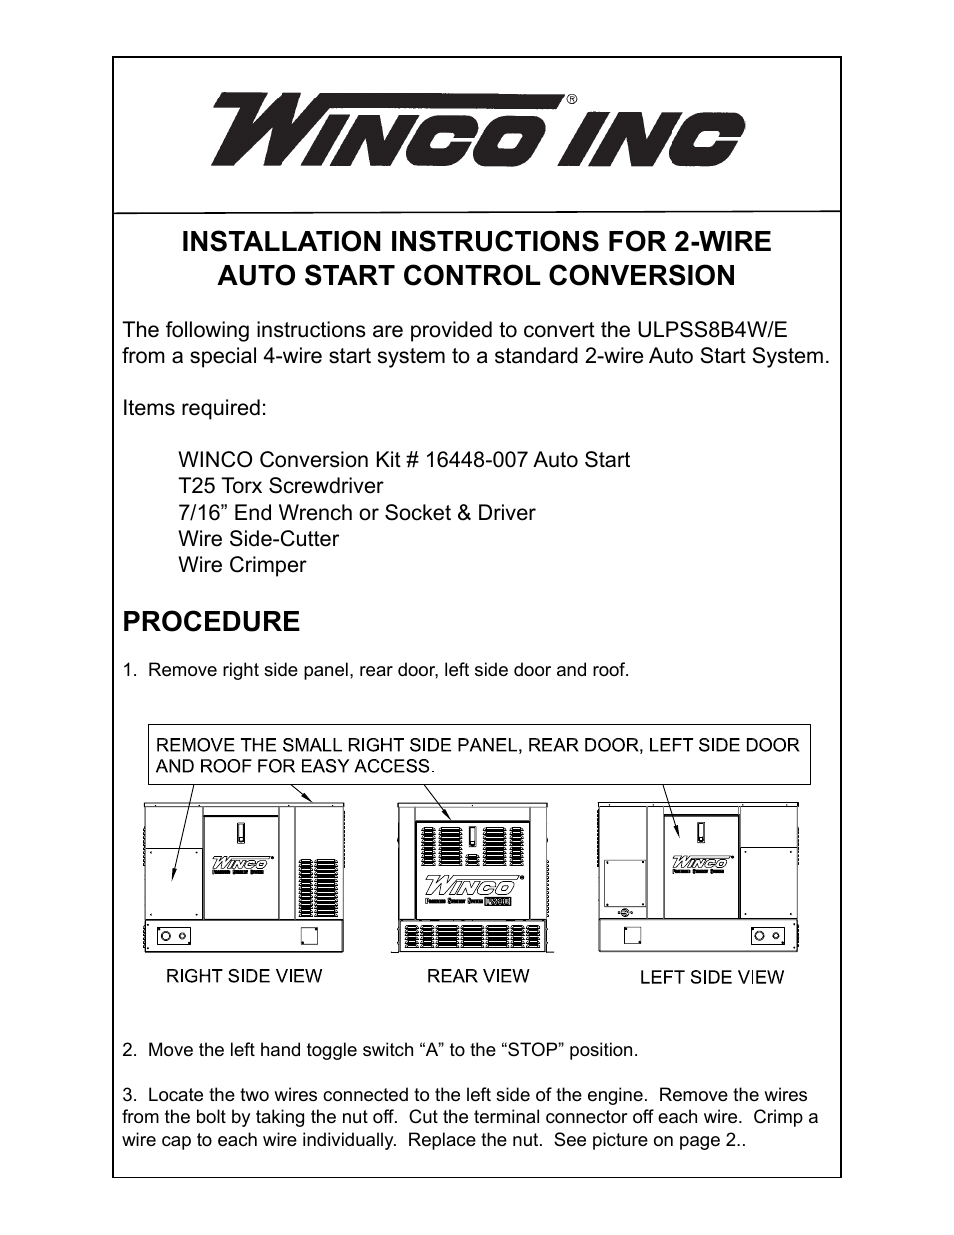 2-Wire Conversion Instructions ULPSS8B2W/E